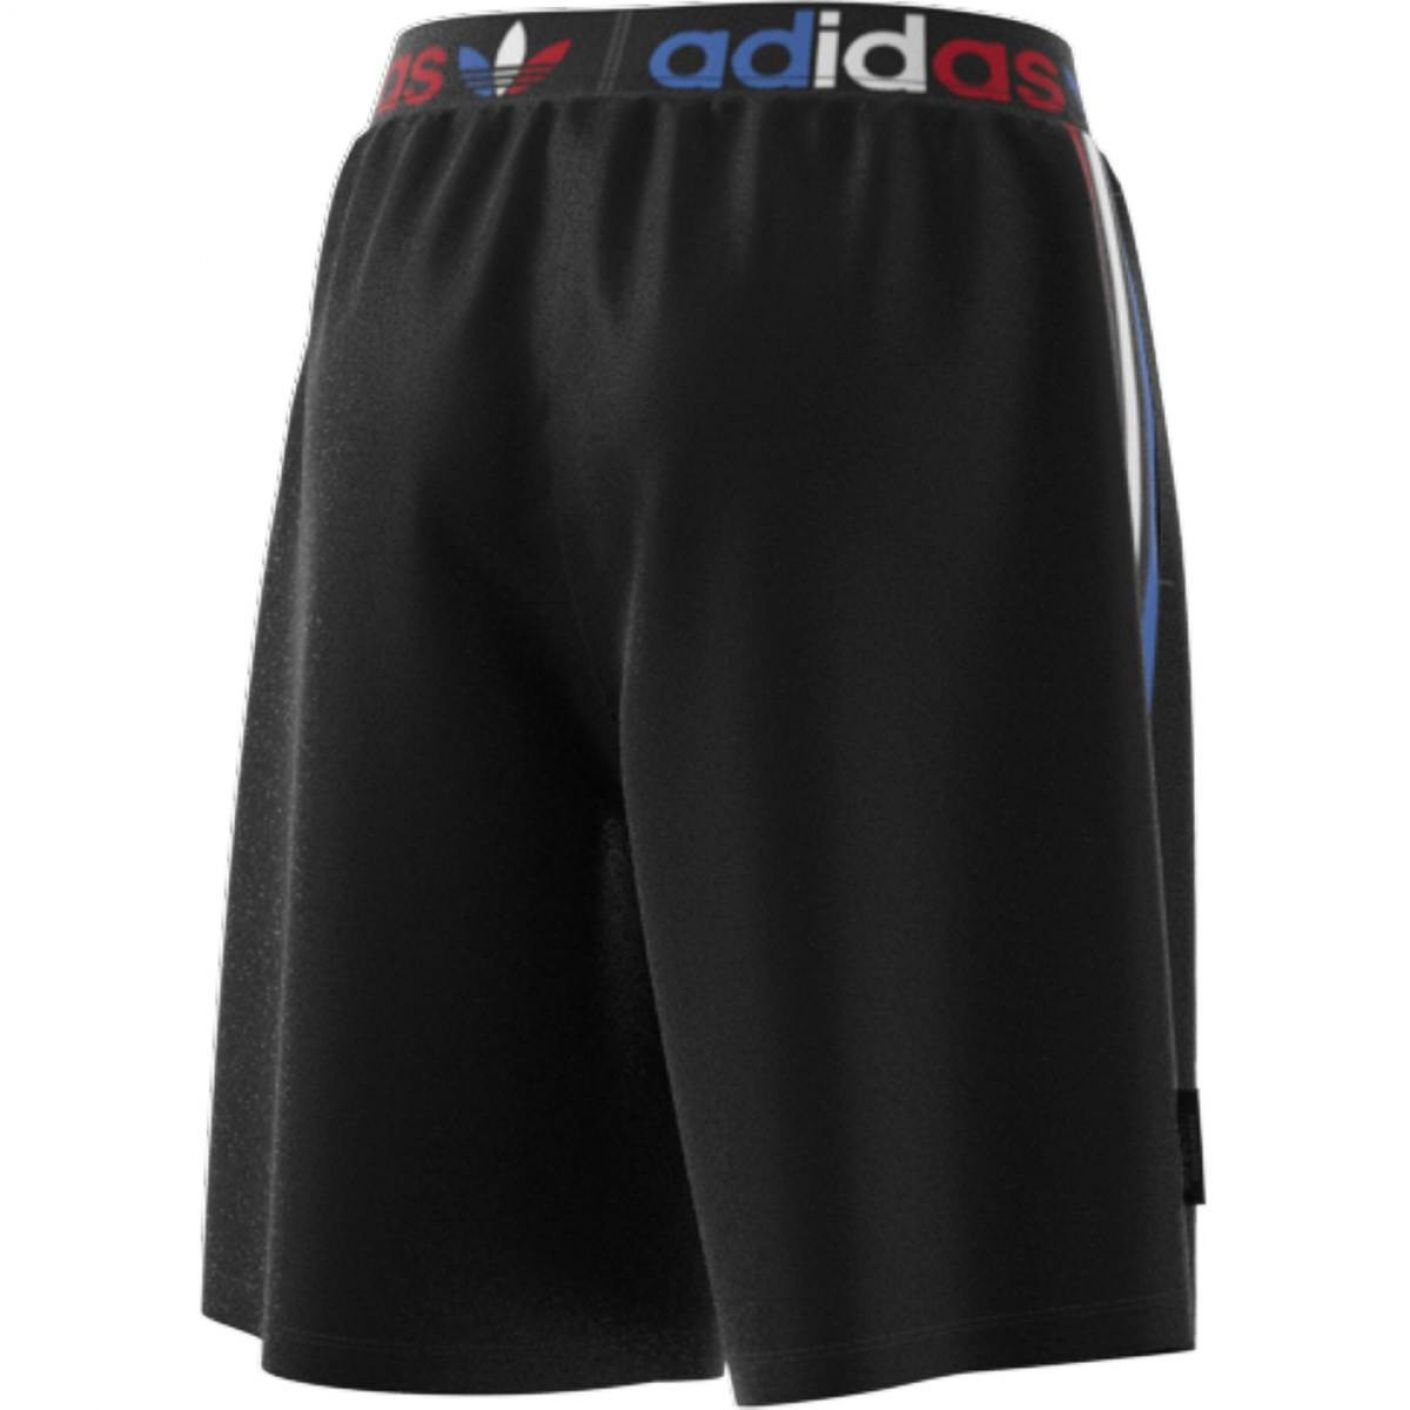 Adidas Shorts Primeblue Adicolor Black for Women